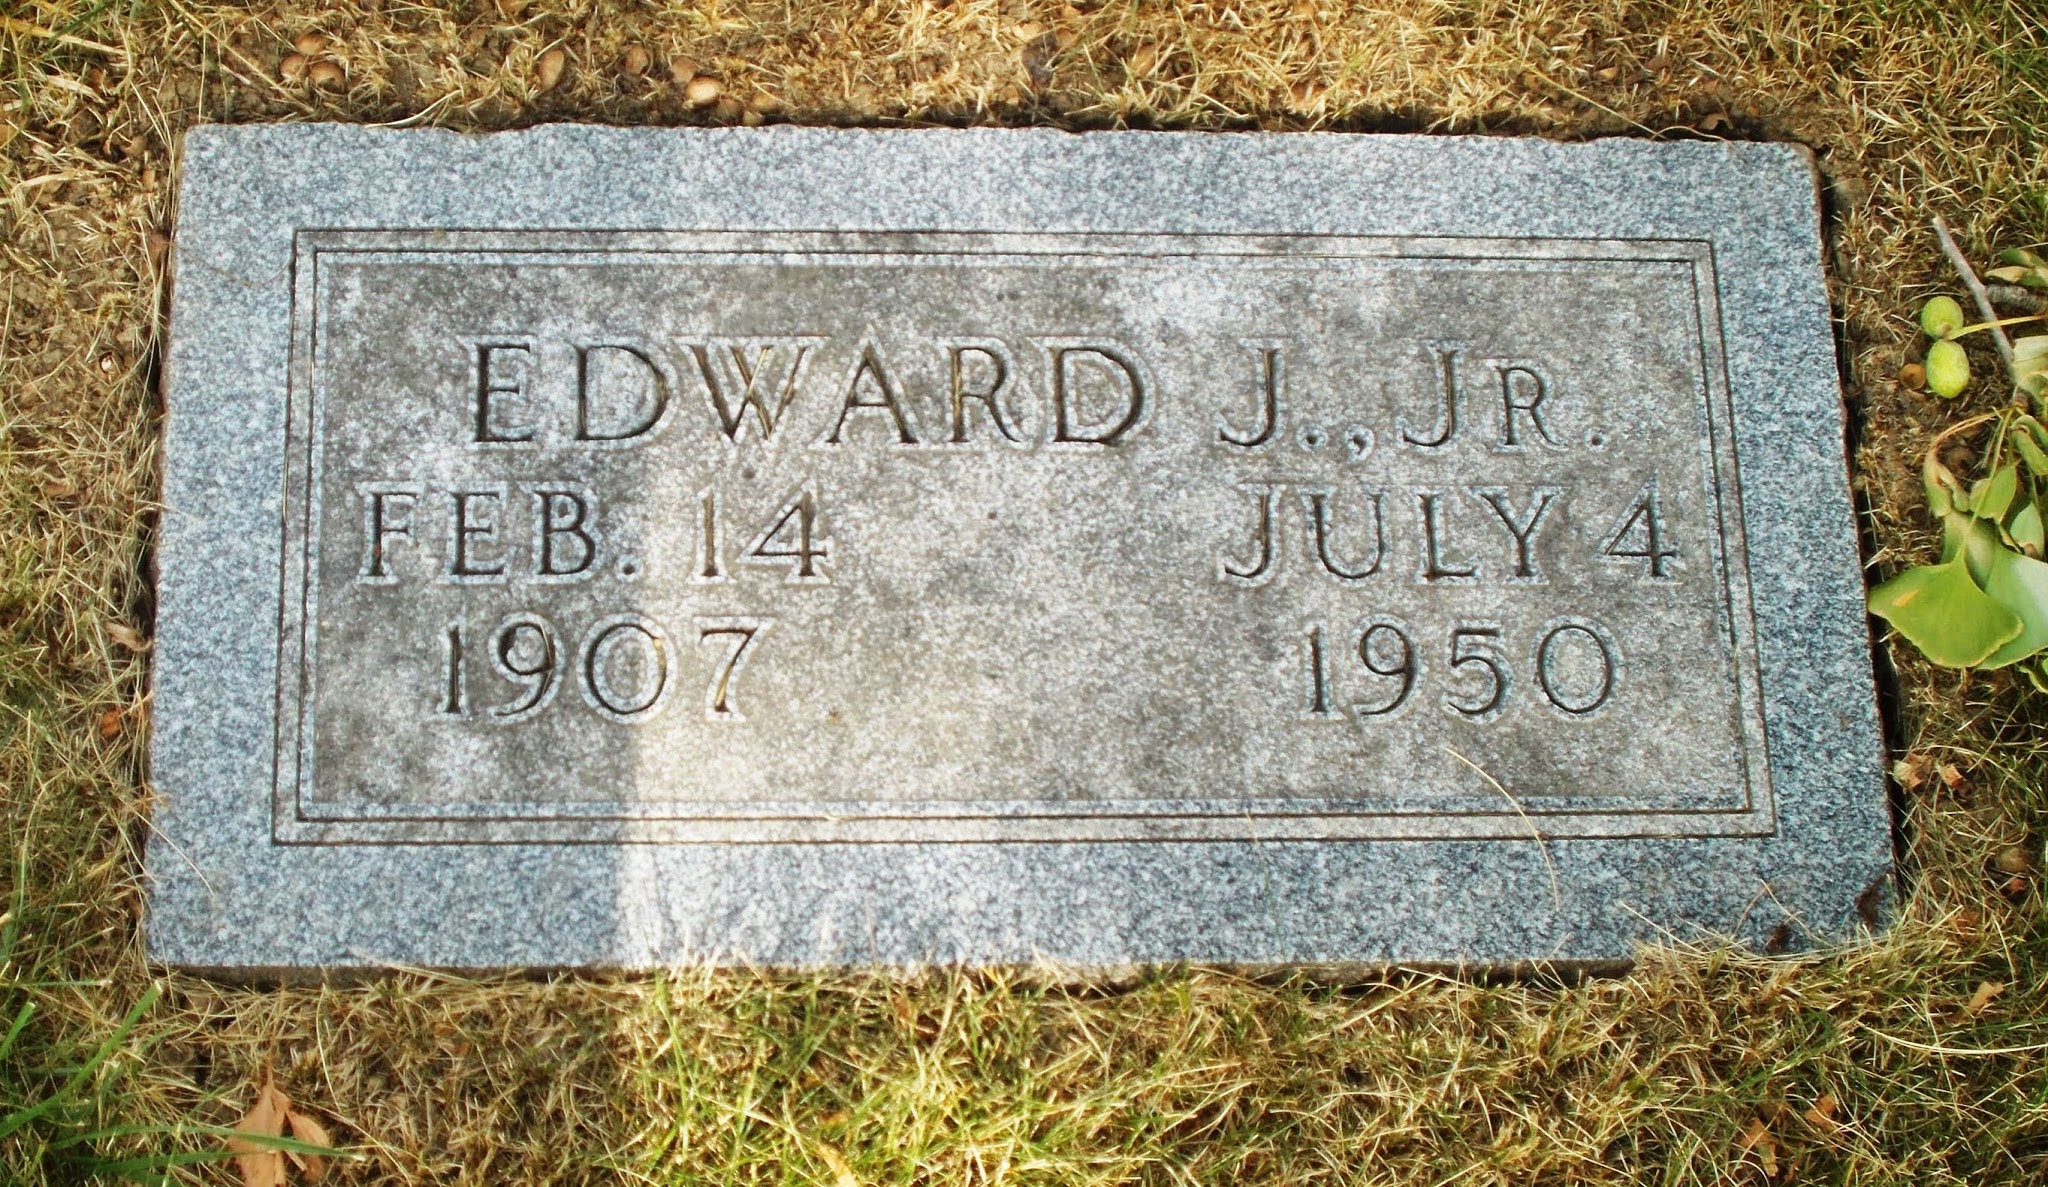 Edward J Hecker, Jr